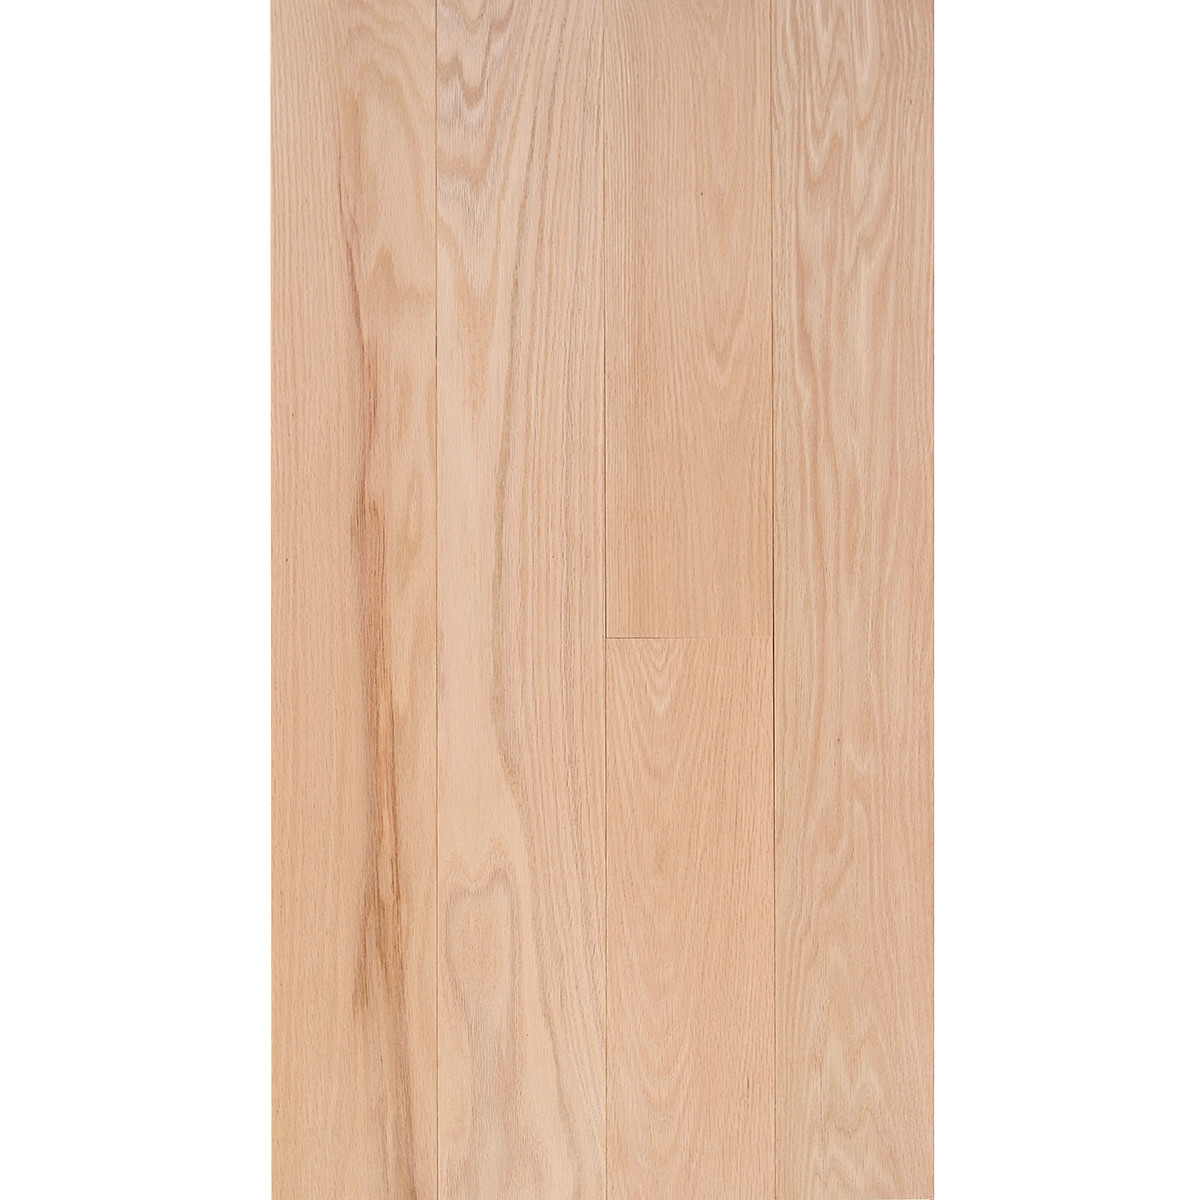 11 Cute 1 1 2 Inch Red Oak Hardwood Flooring 2024 free download 1 1 2 inch red oak hardwood flooring of red oak 3 4 x 5 select grade flooring regarding fs 5 redoak select em flooring